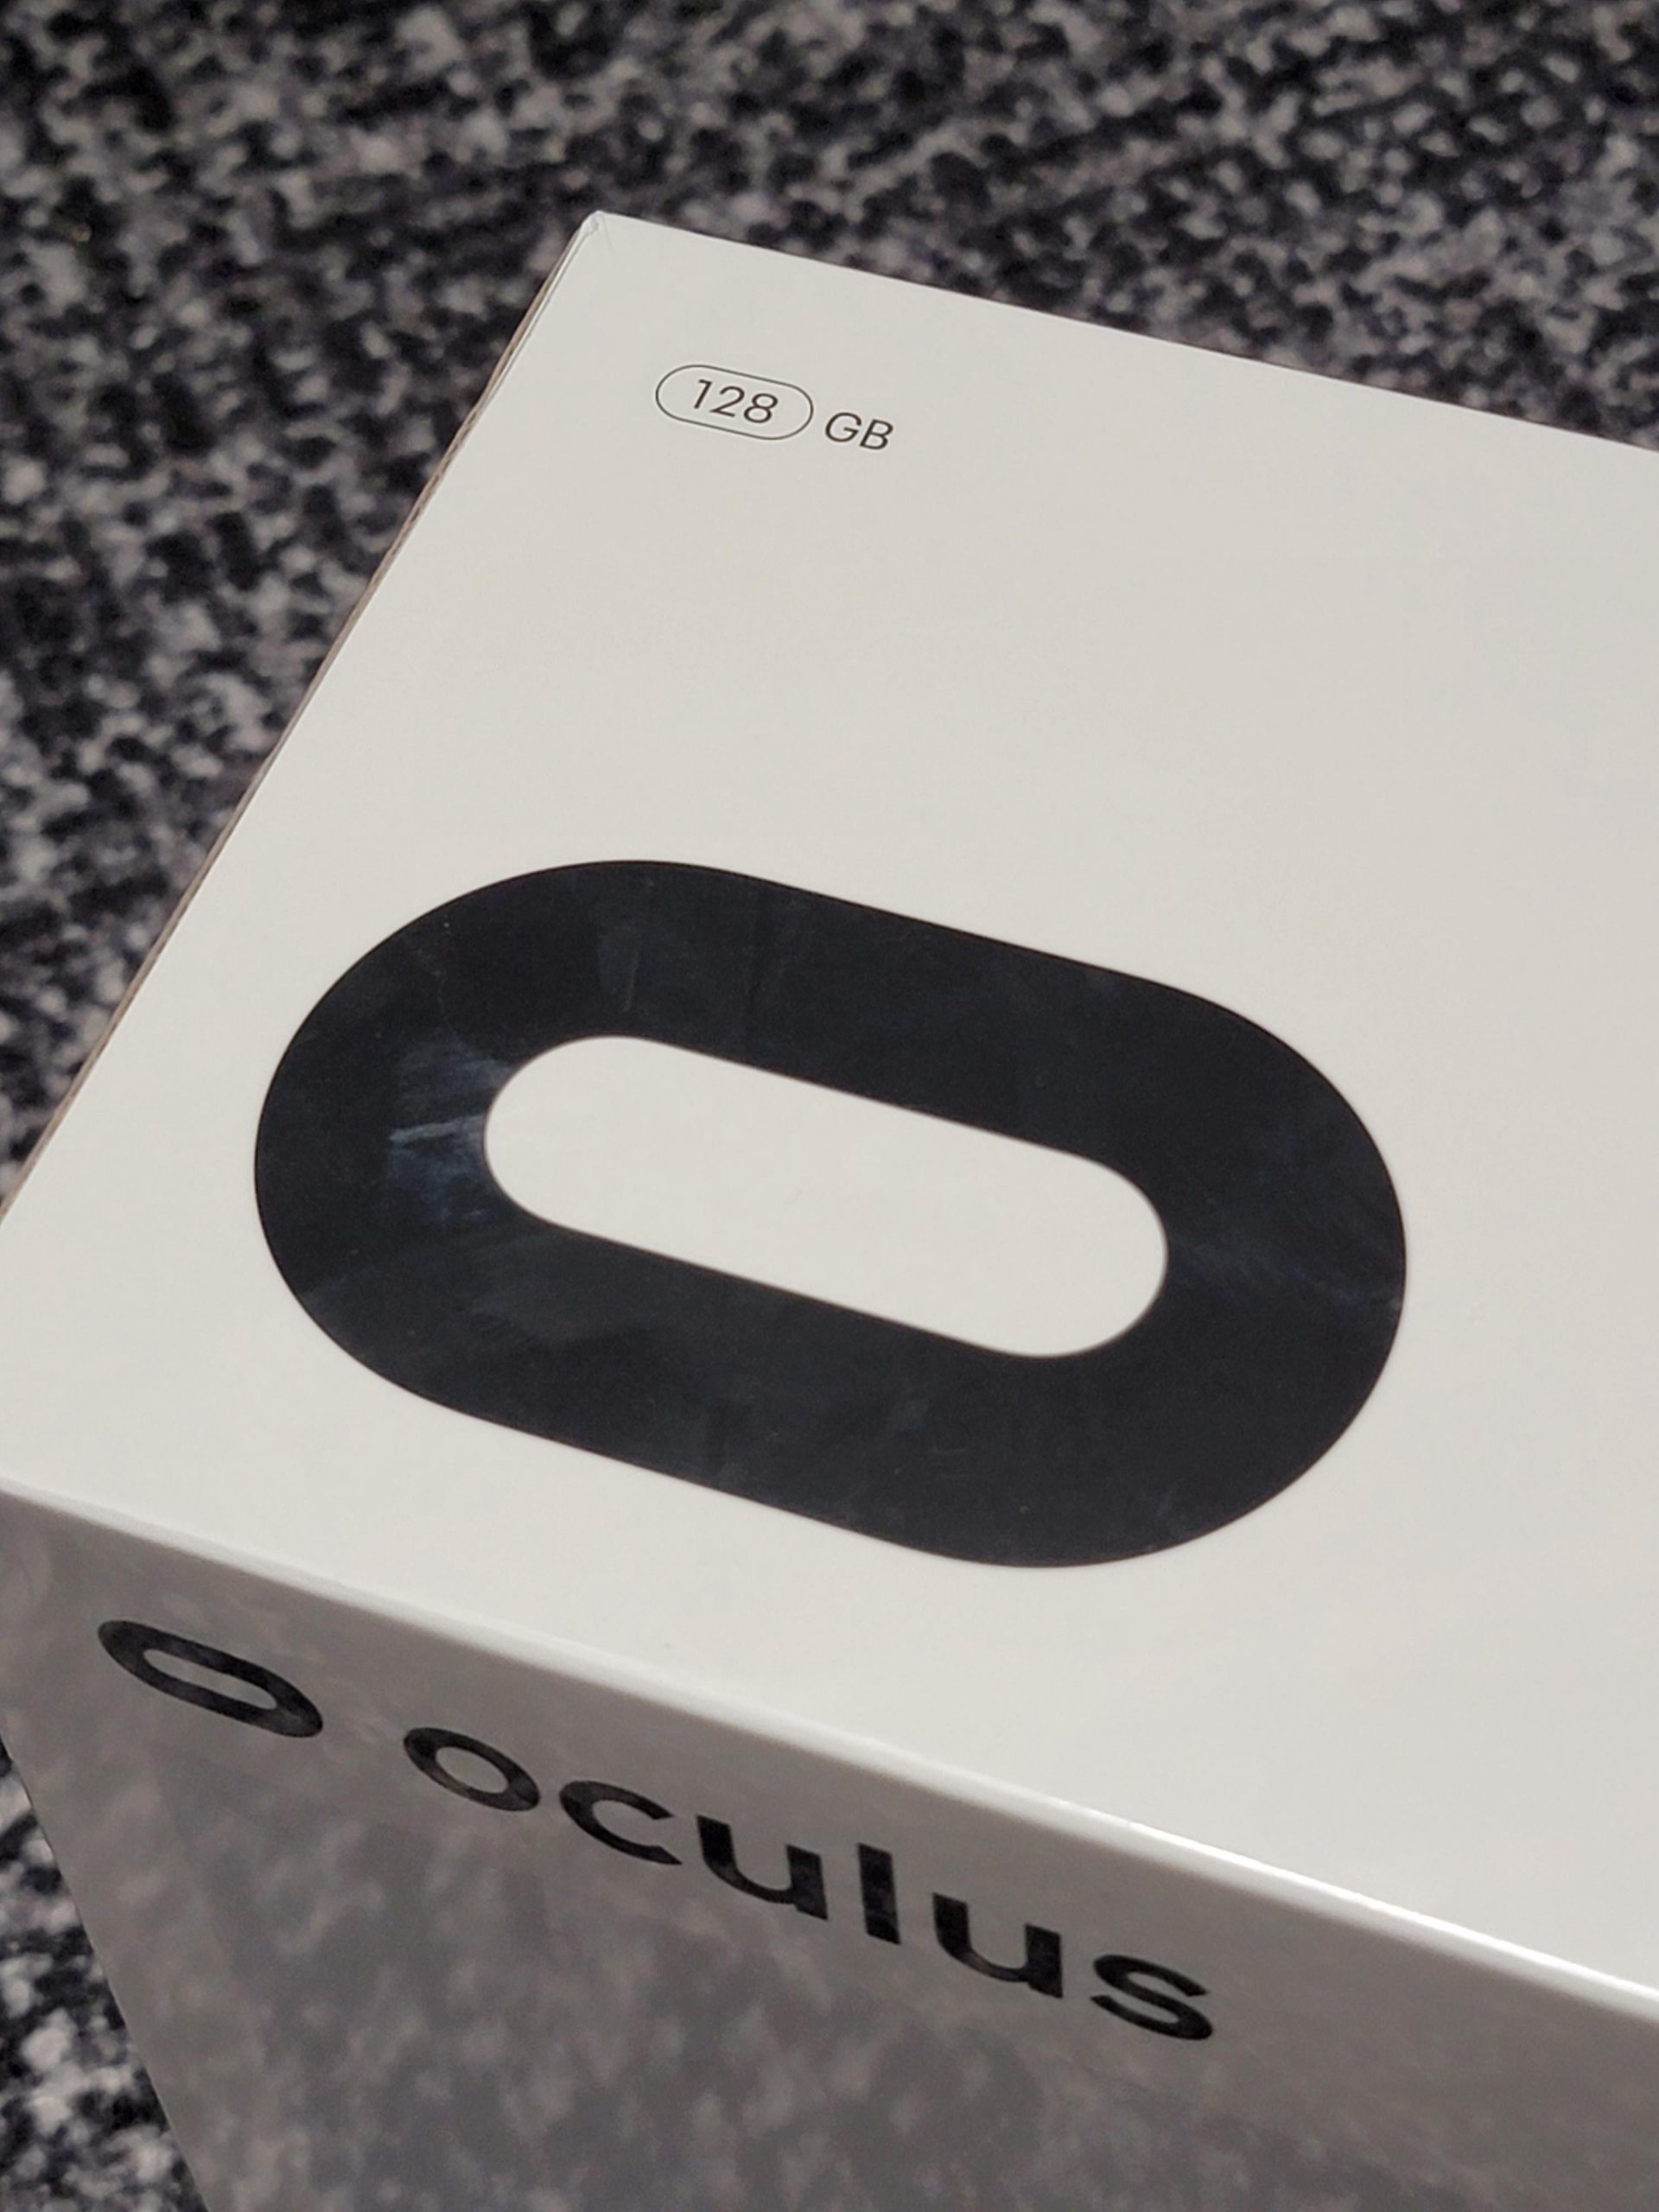 Oculus Quest 2 128 gigas